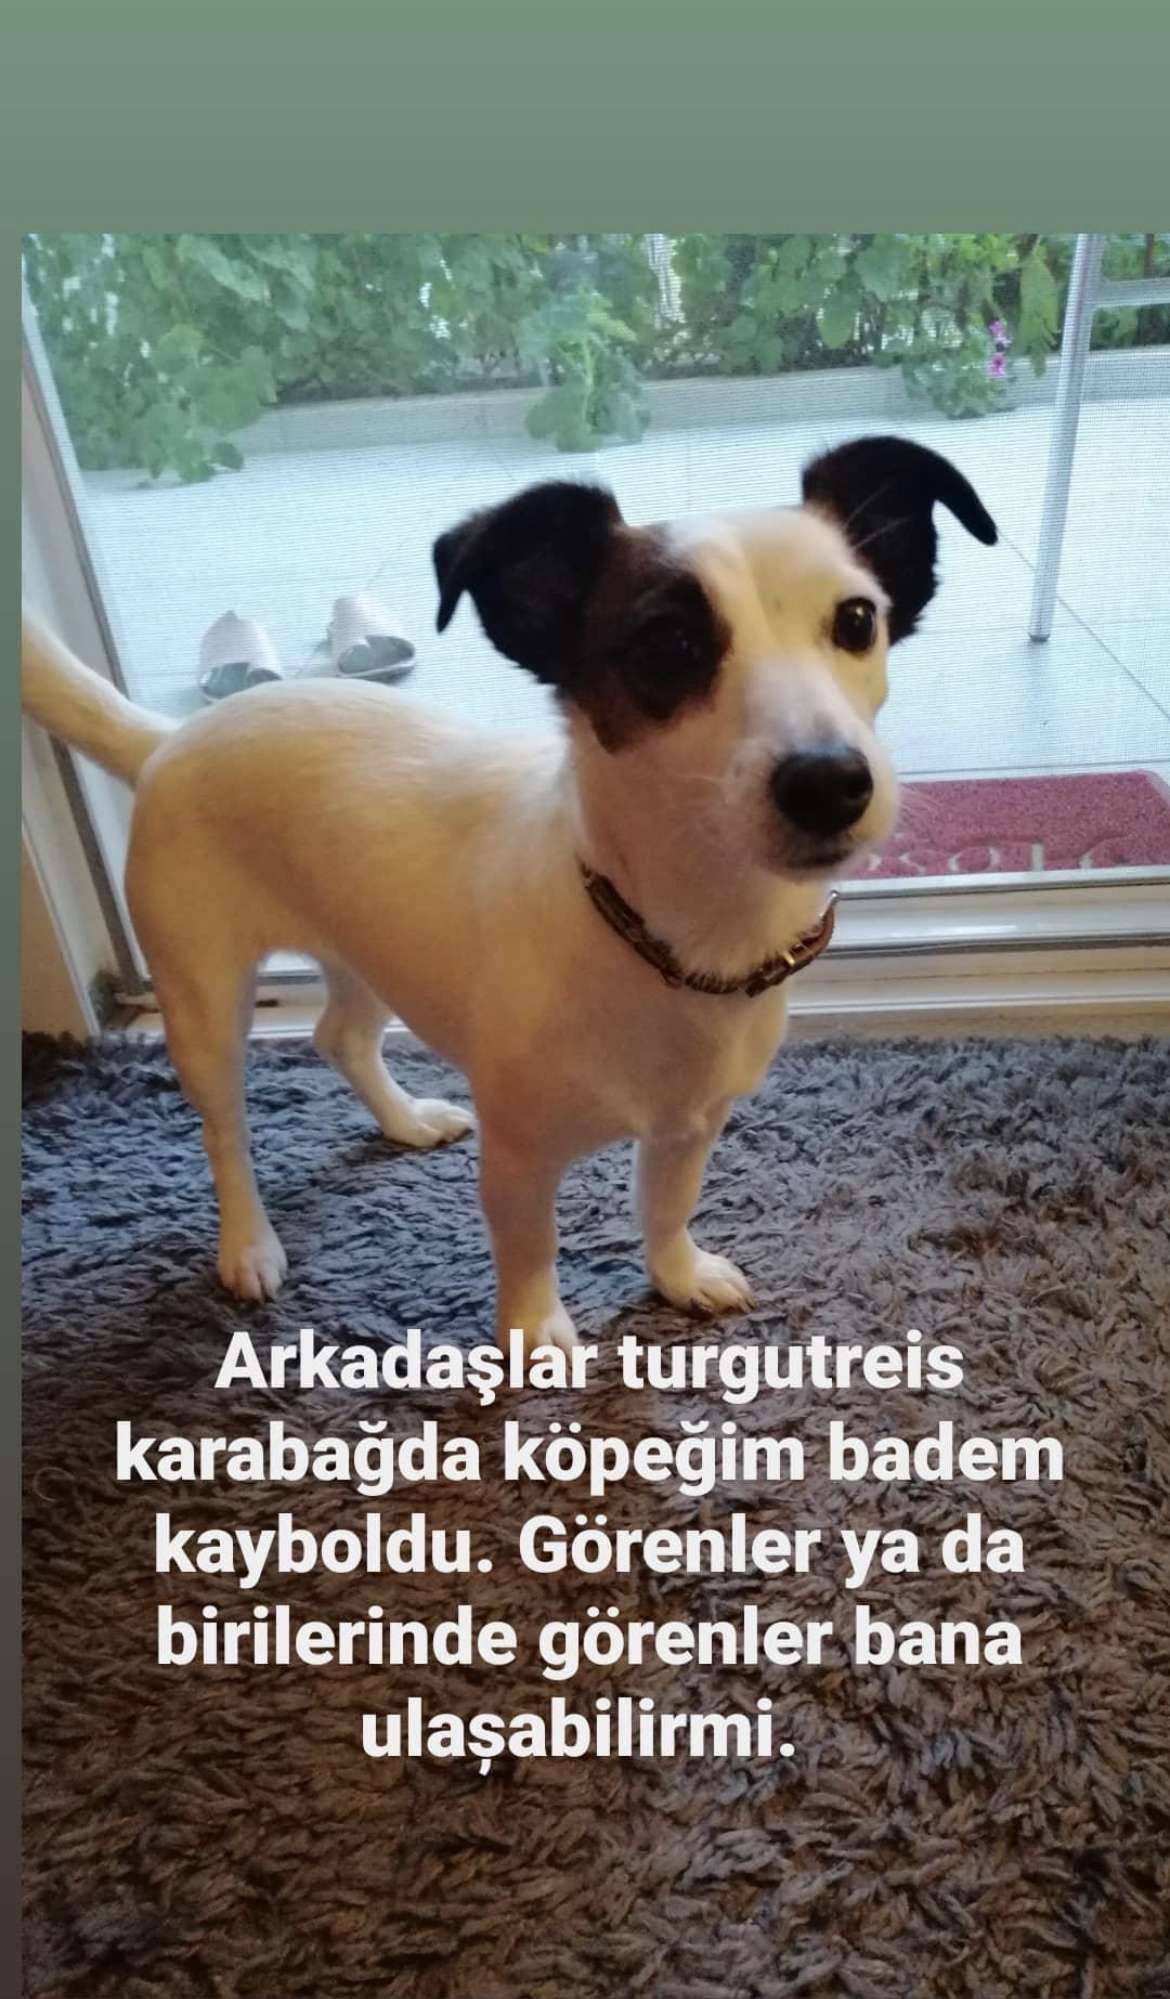 Bodrum Turgutreis Kayıp köpek